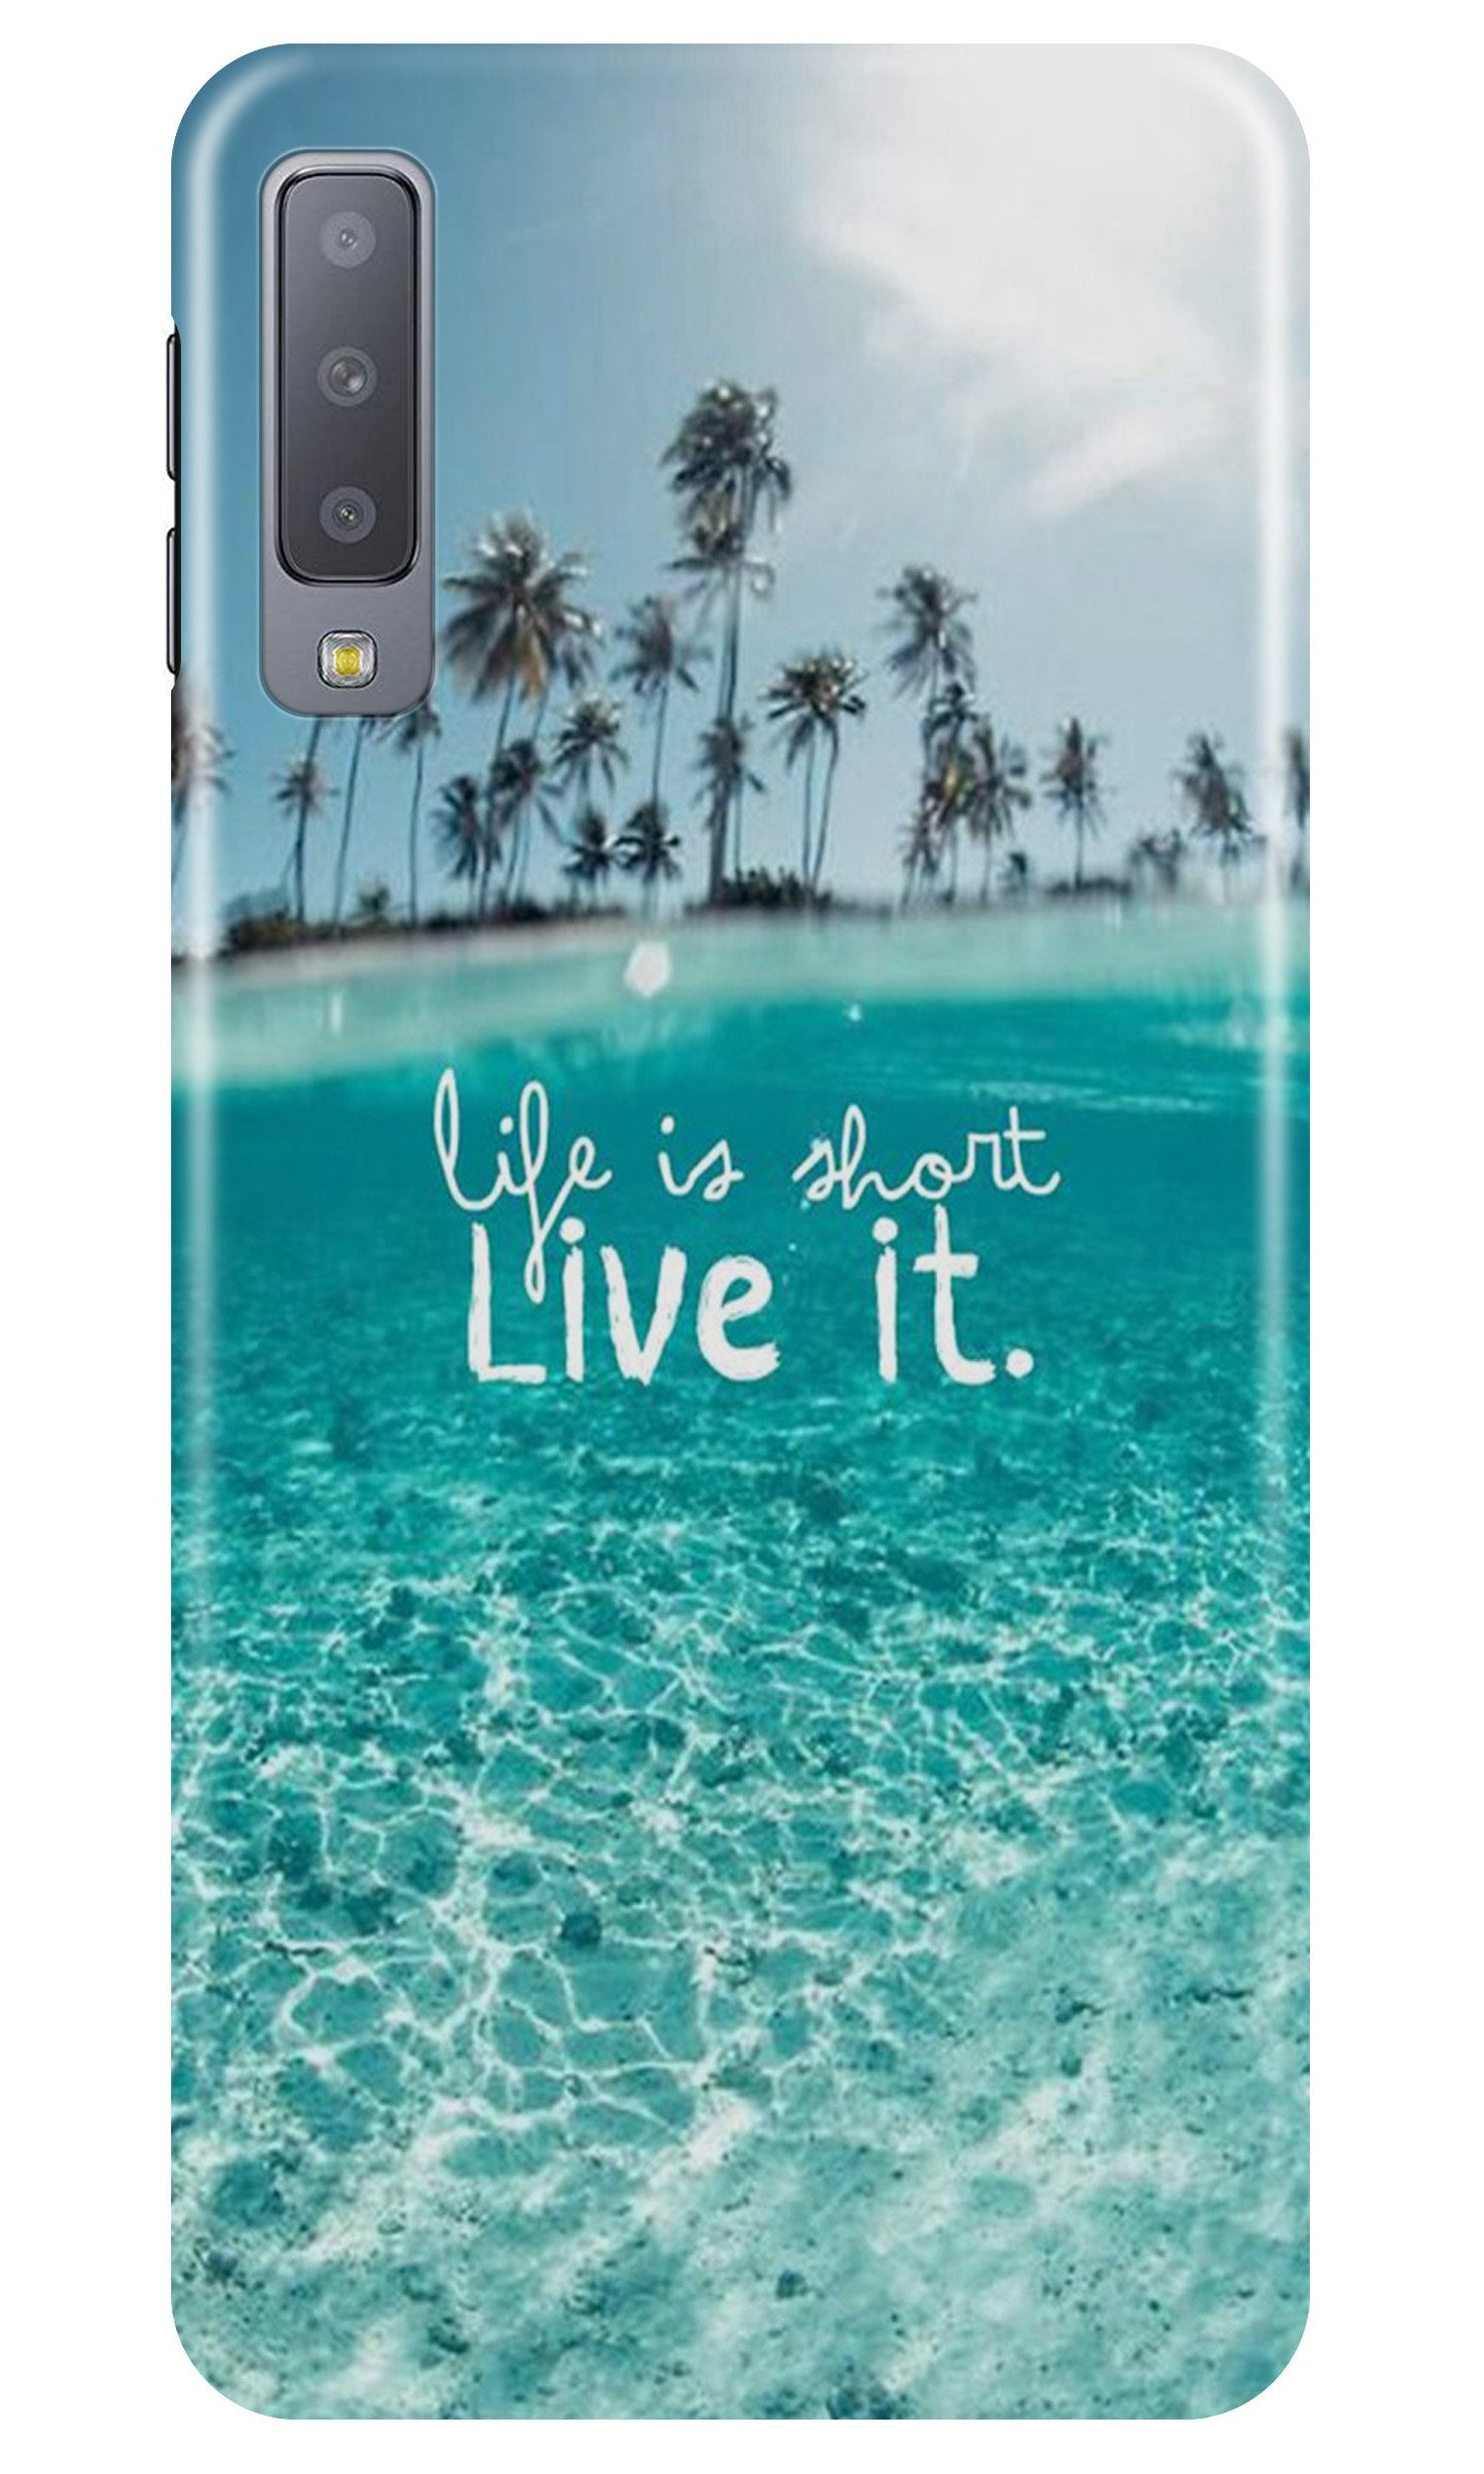 Life is short live it Case for Xiaomi Mi A3